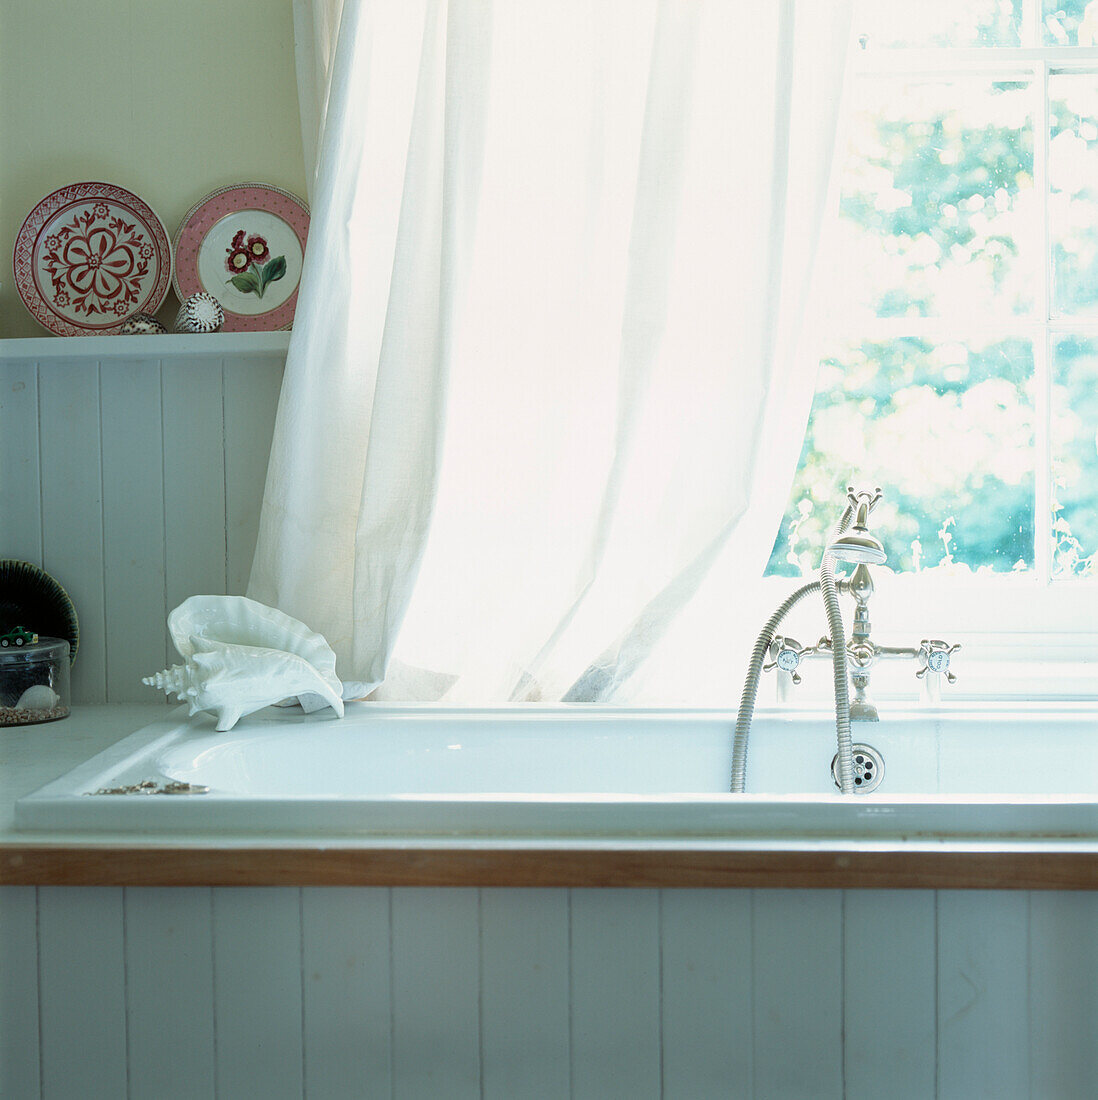 White paneled bathroom with large sash window bath and vintage taps